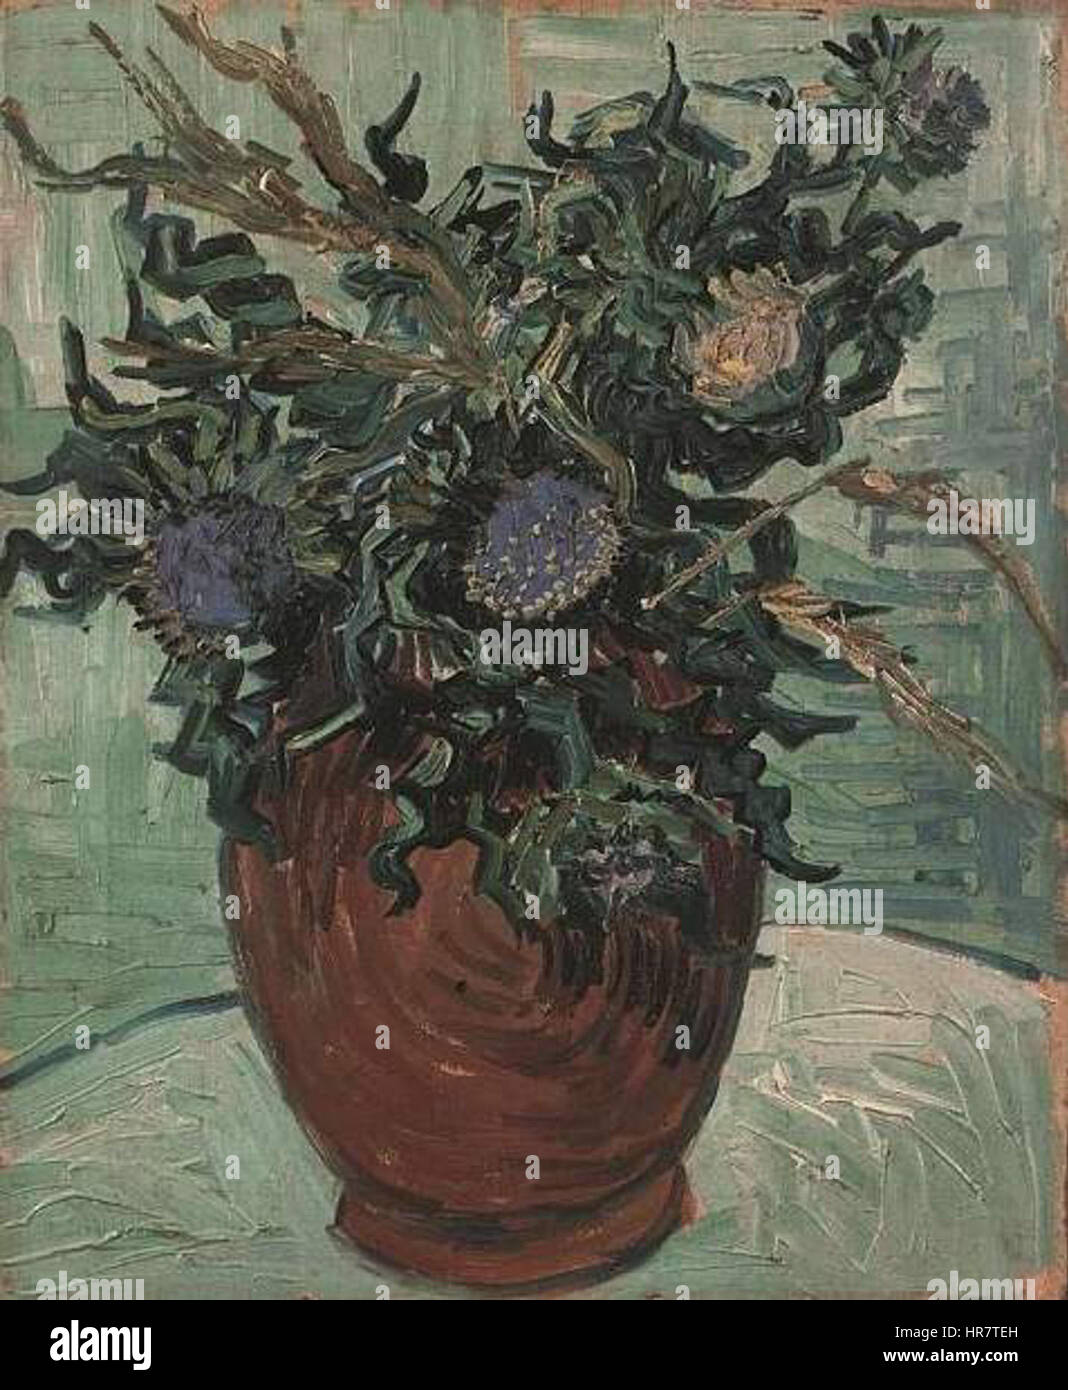 Vincent Van Gogh Flower Vase With Thistles Stock Photo Alamy